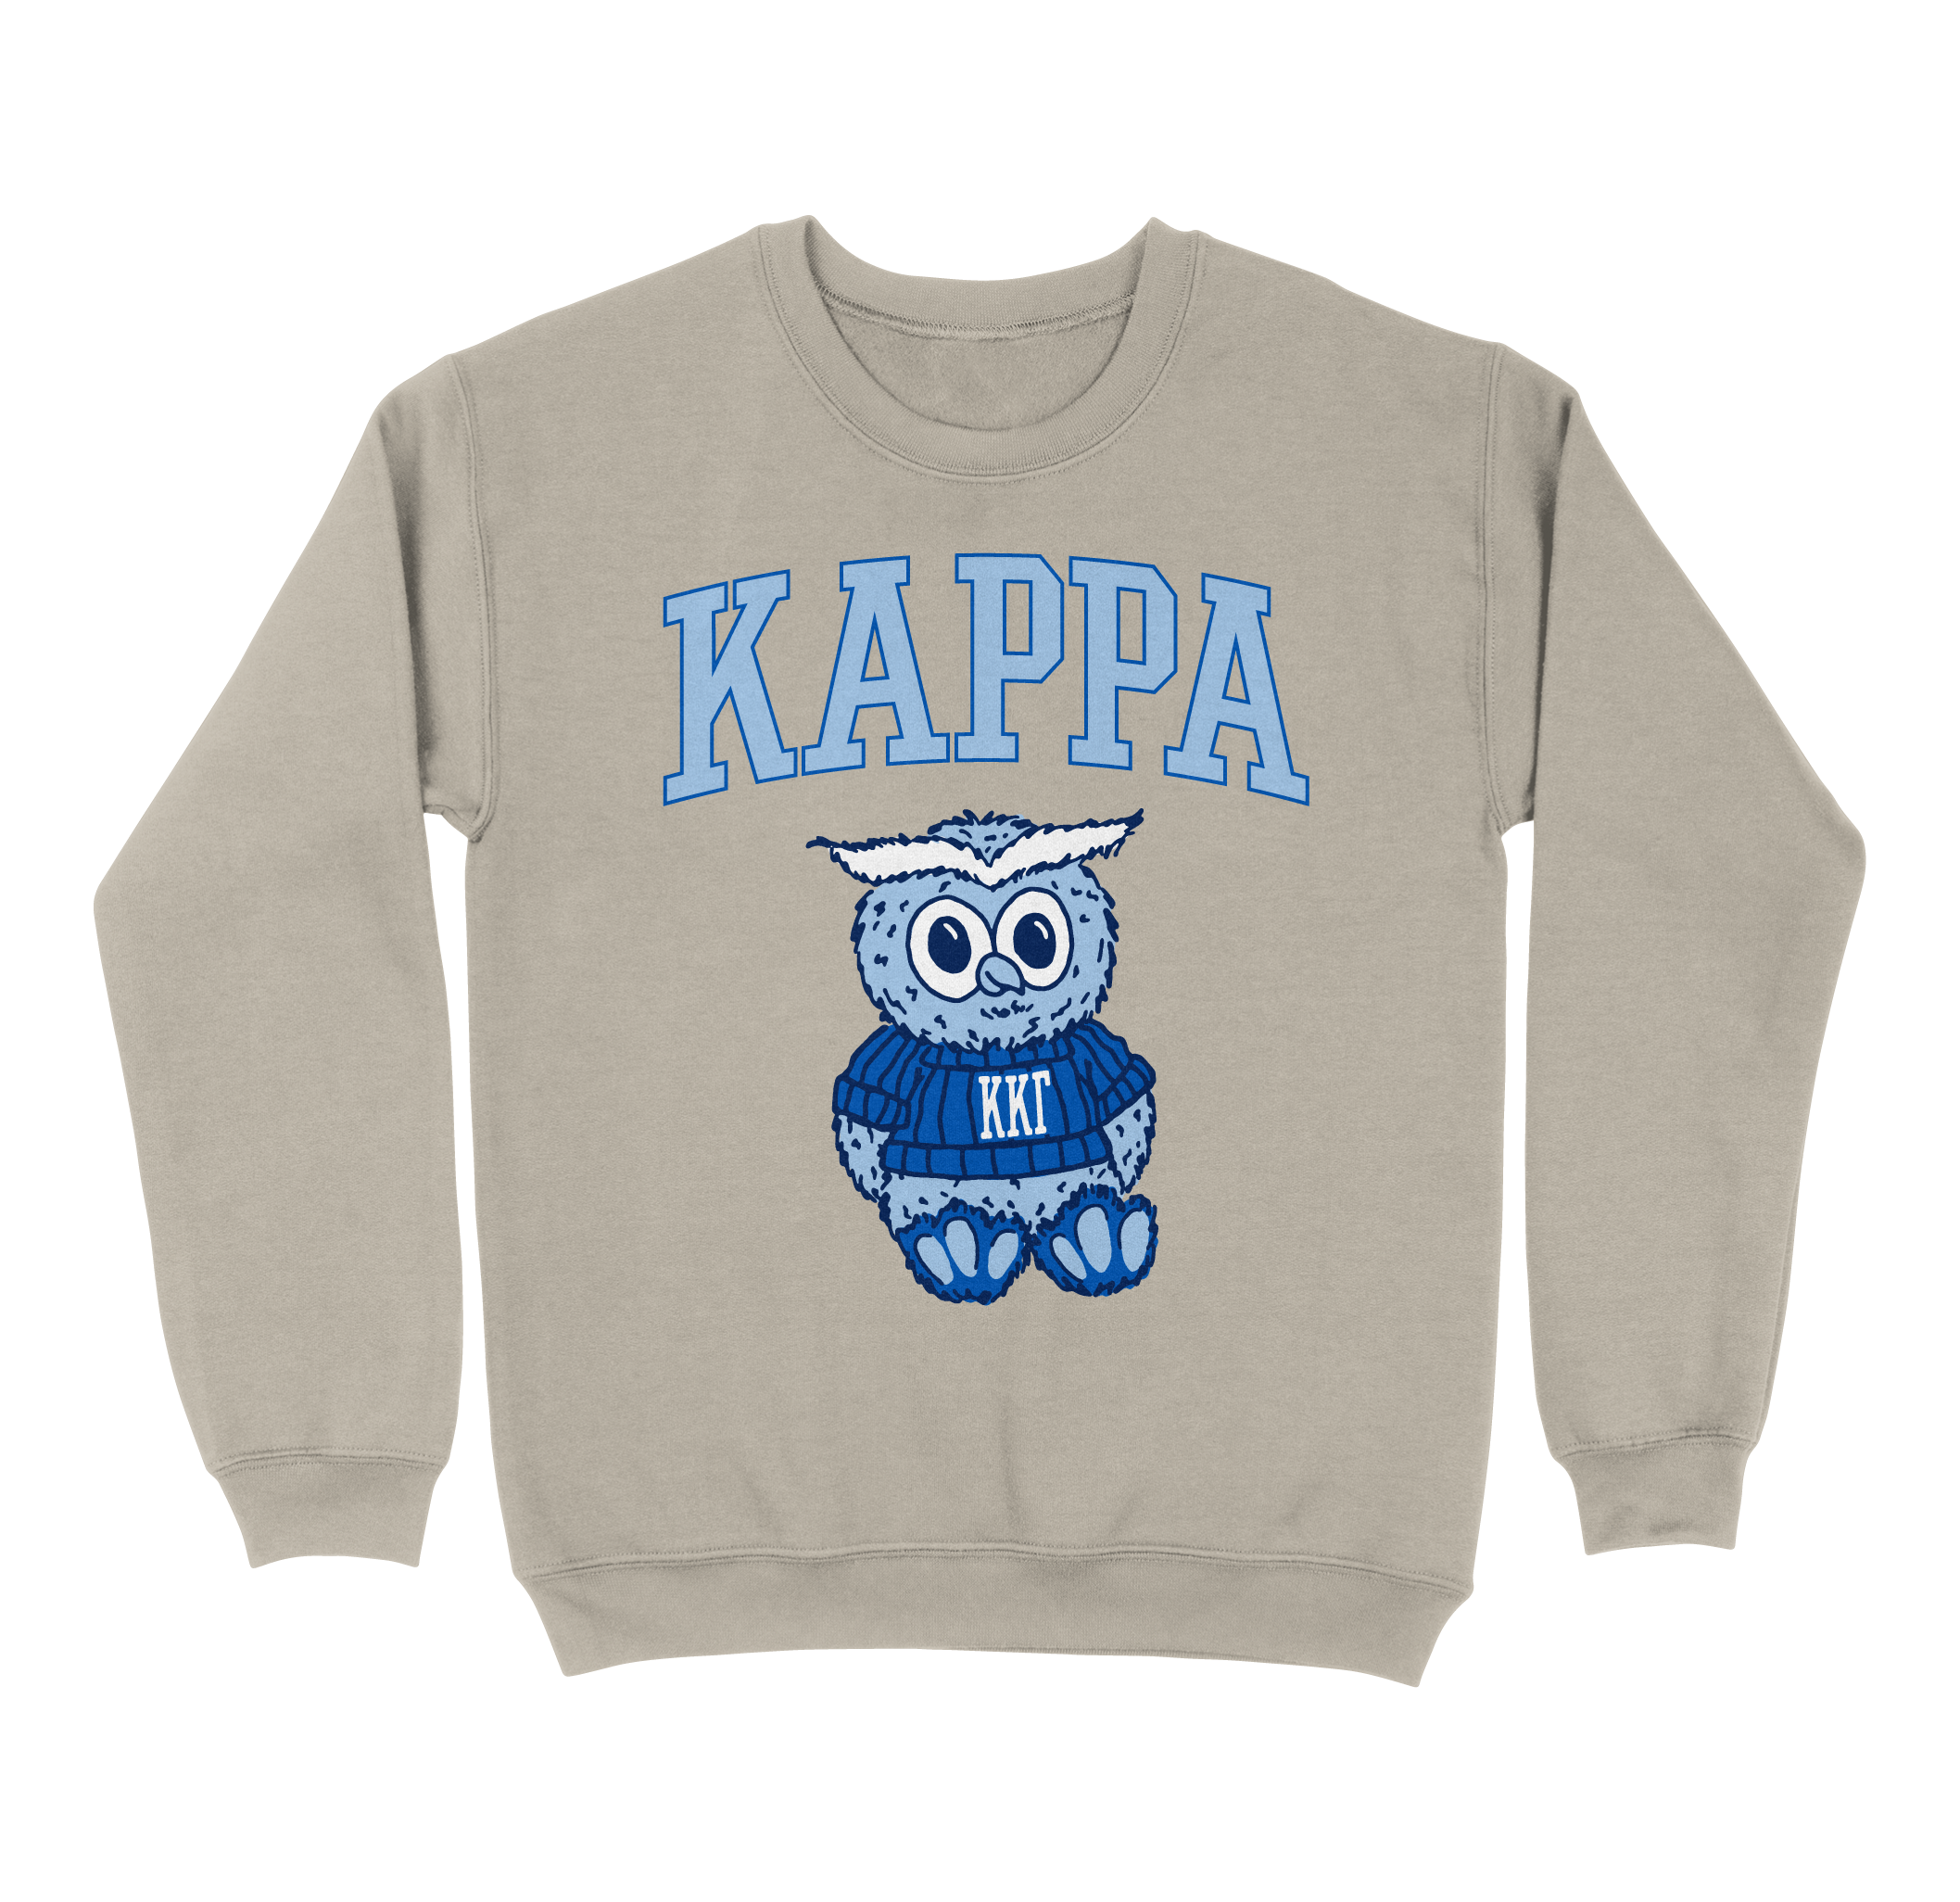 Ødelægge campingvogn Optøjer B-Greek Custom : Kappa Kappa Gamma Sorority Mascot Sweatshirt -  B-Unlimited.com – B-Unlimited Custom Apparel Shop